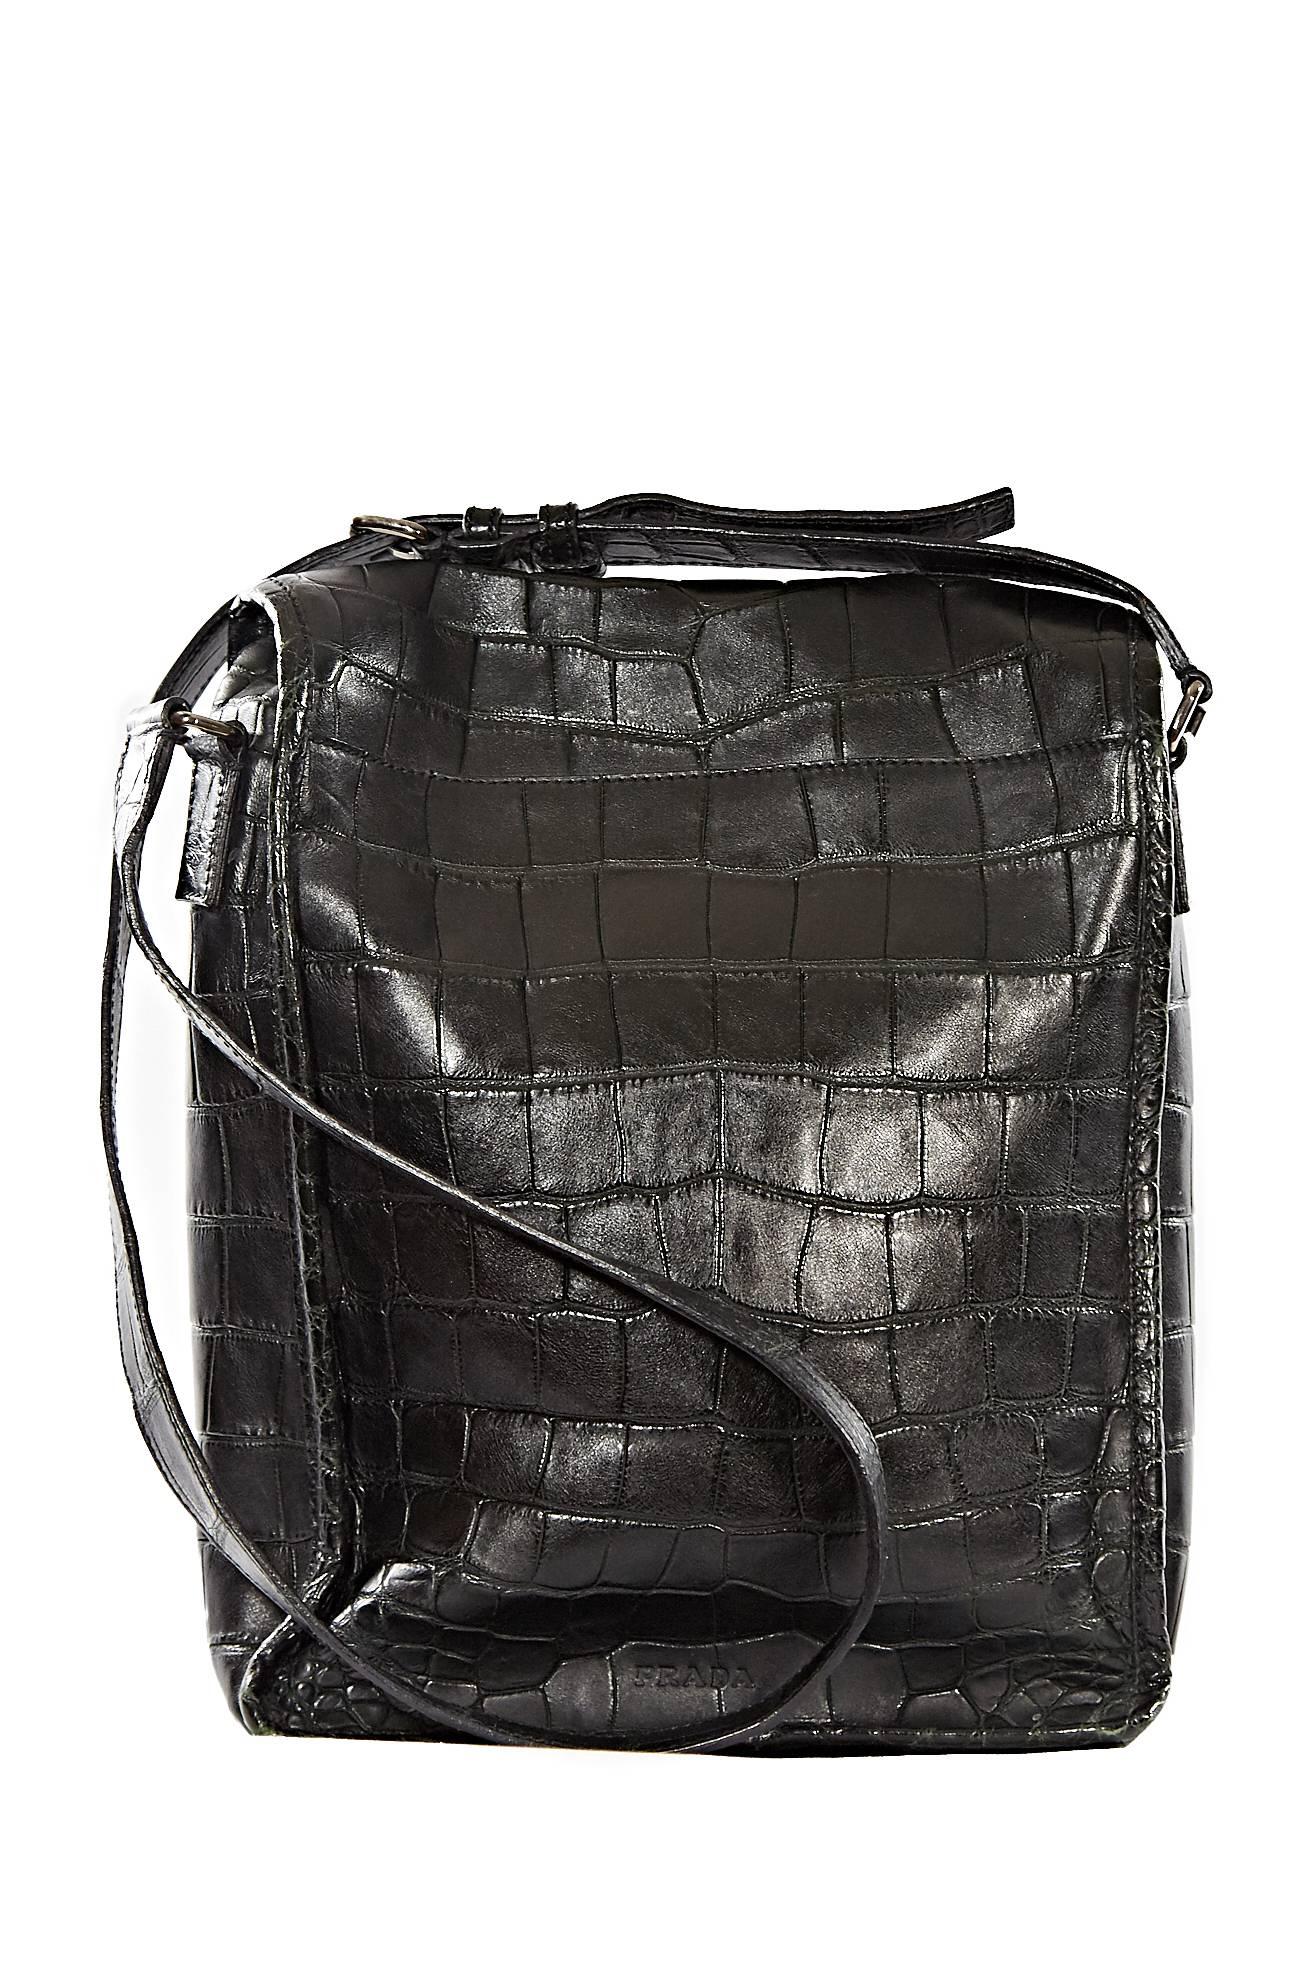 Prada Black Crocodile Crossbody Bag. Messenger style flap with belt closure.